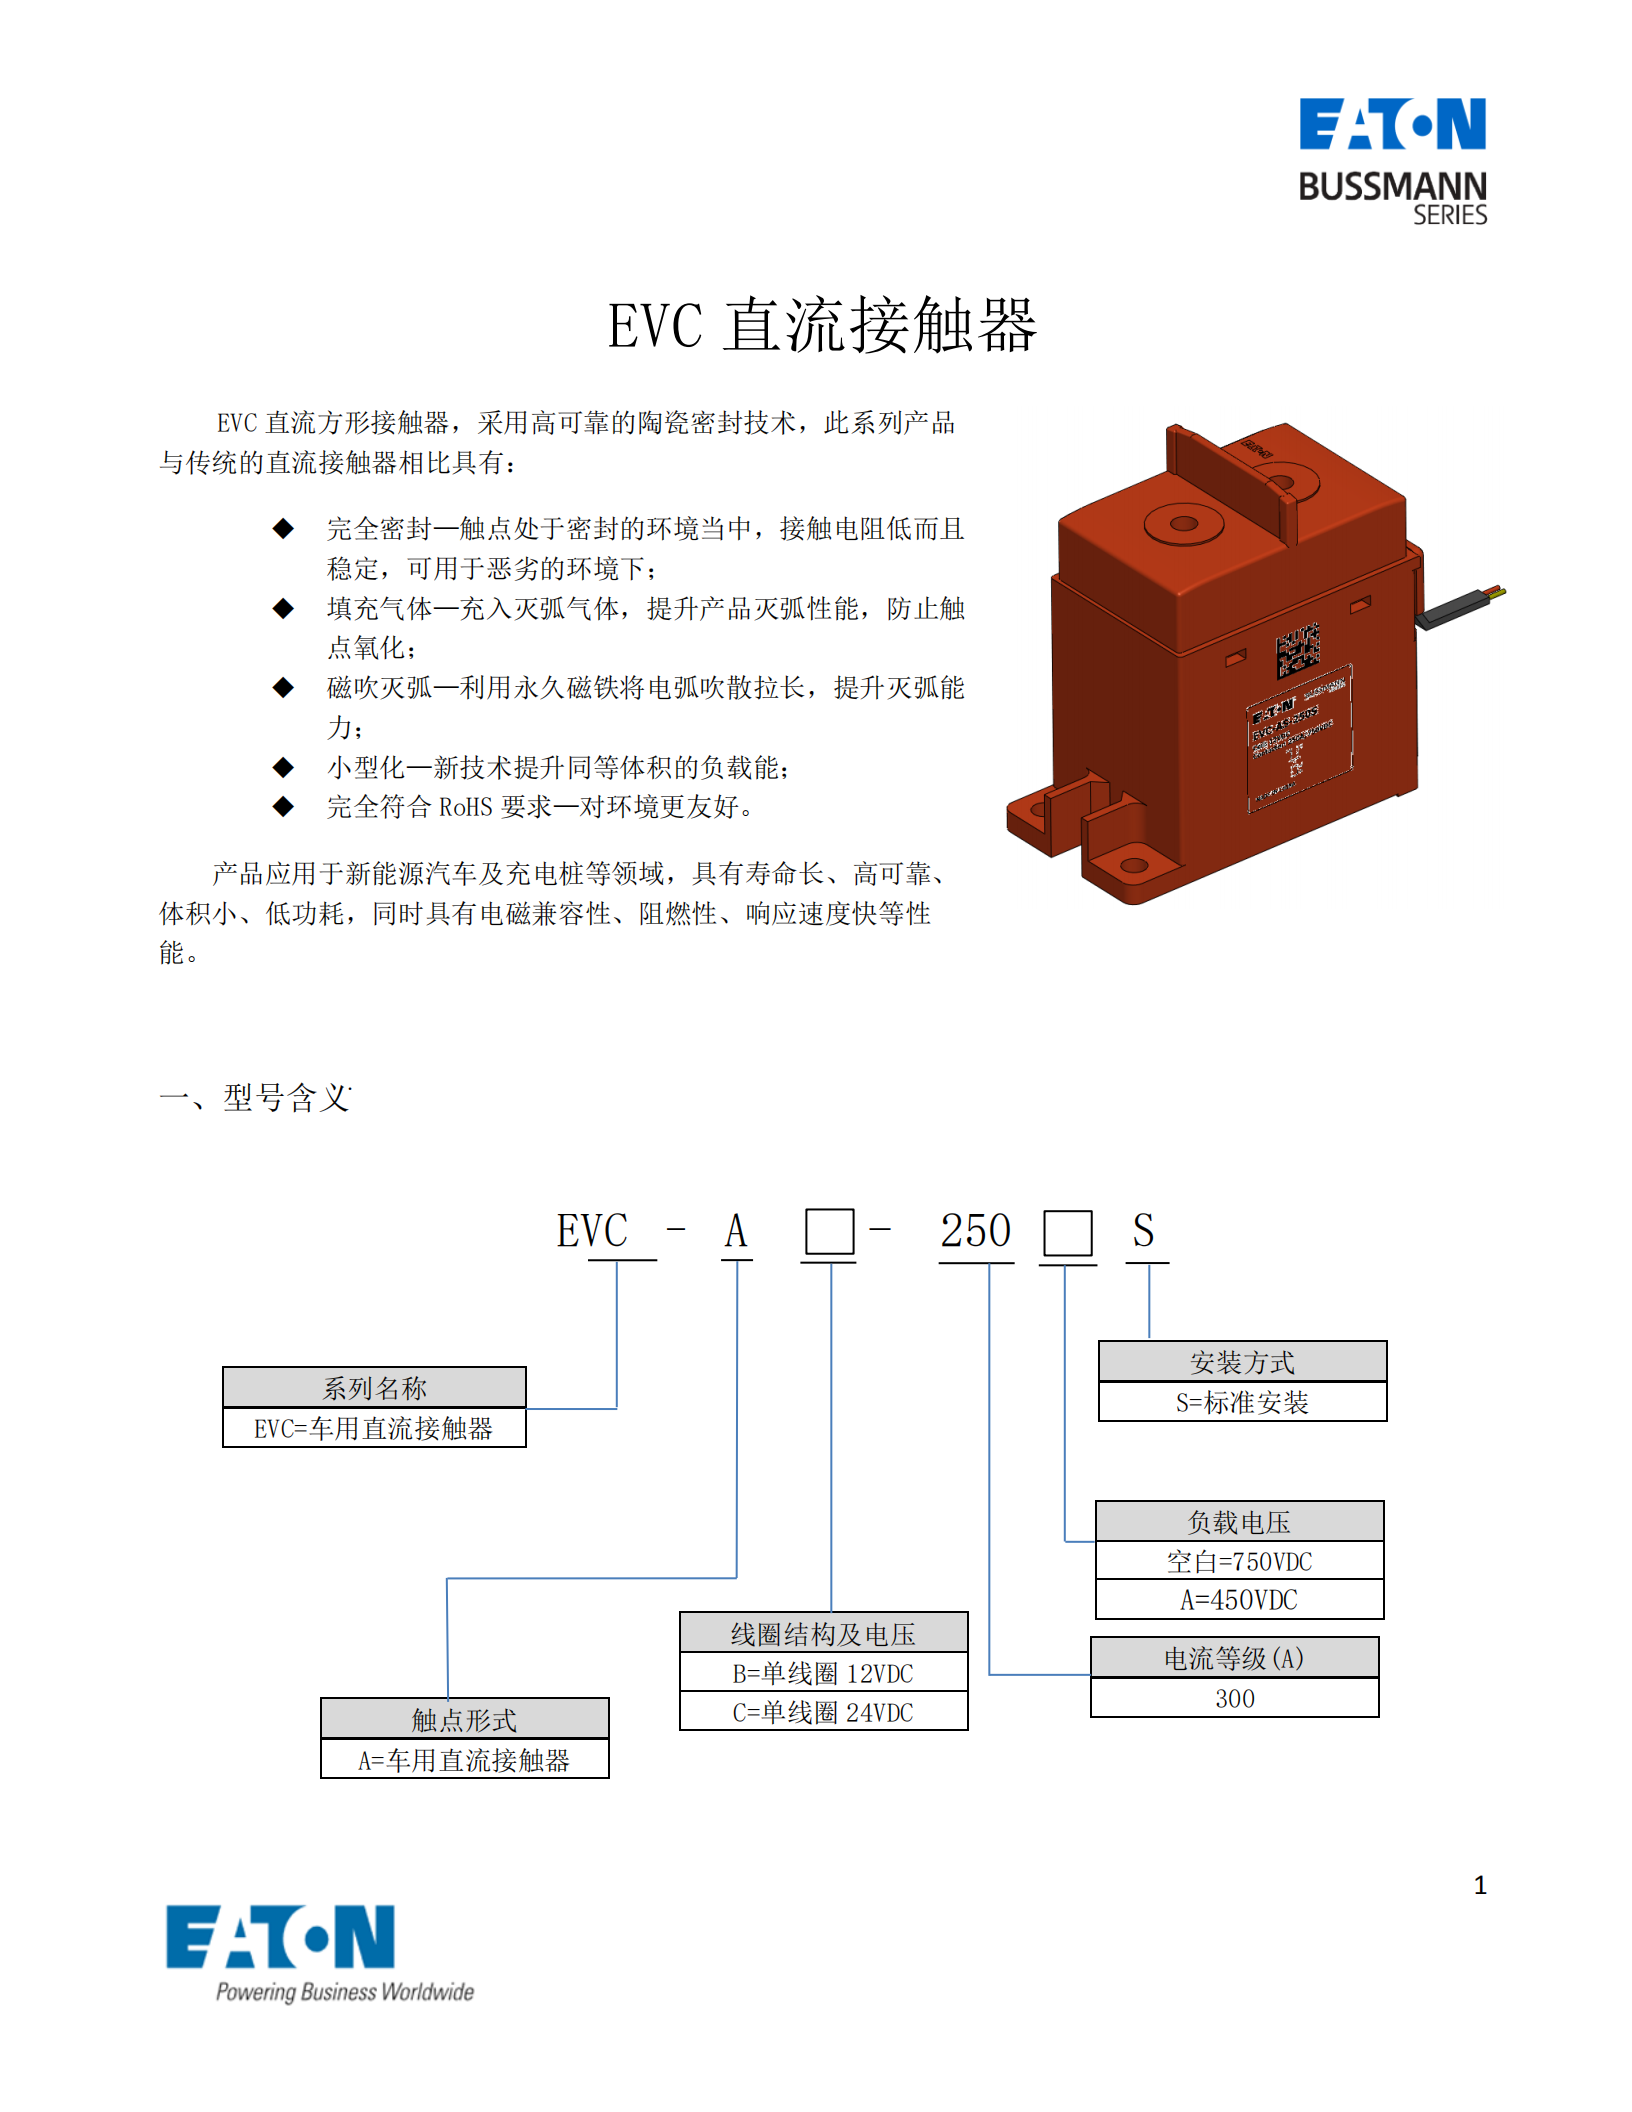 EVC-AB-250S直流接触器